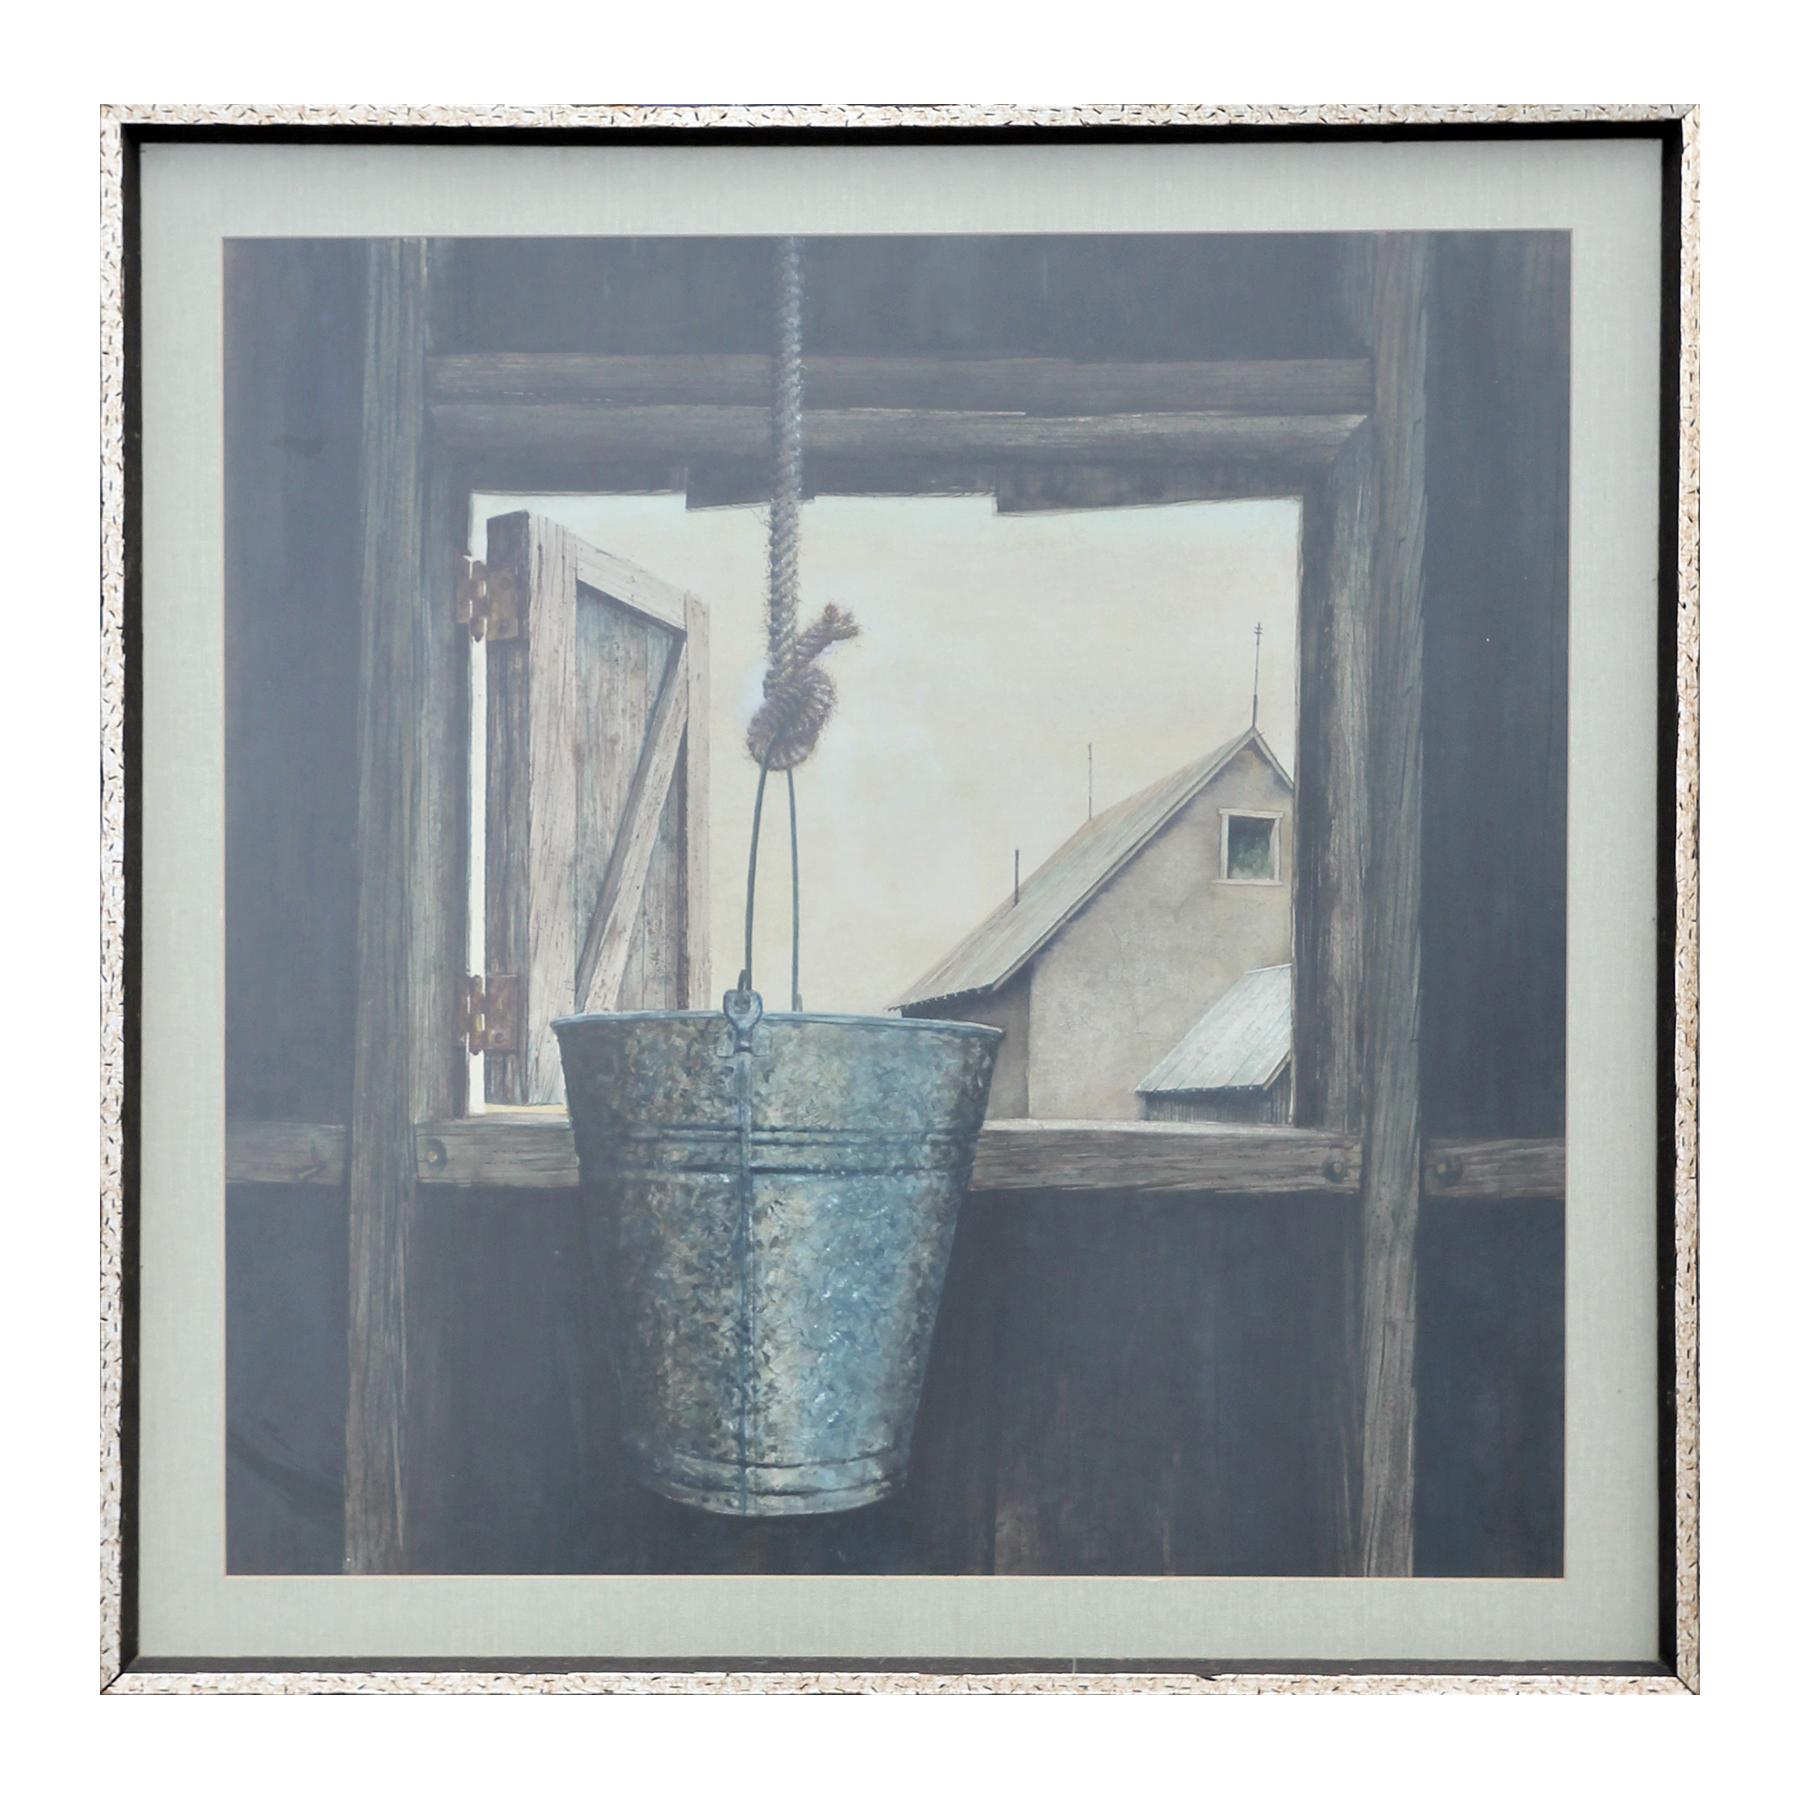 Rural Gray Toned Naturalistic Bucket in Window Still Life Farm Painting